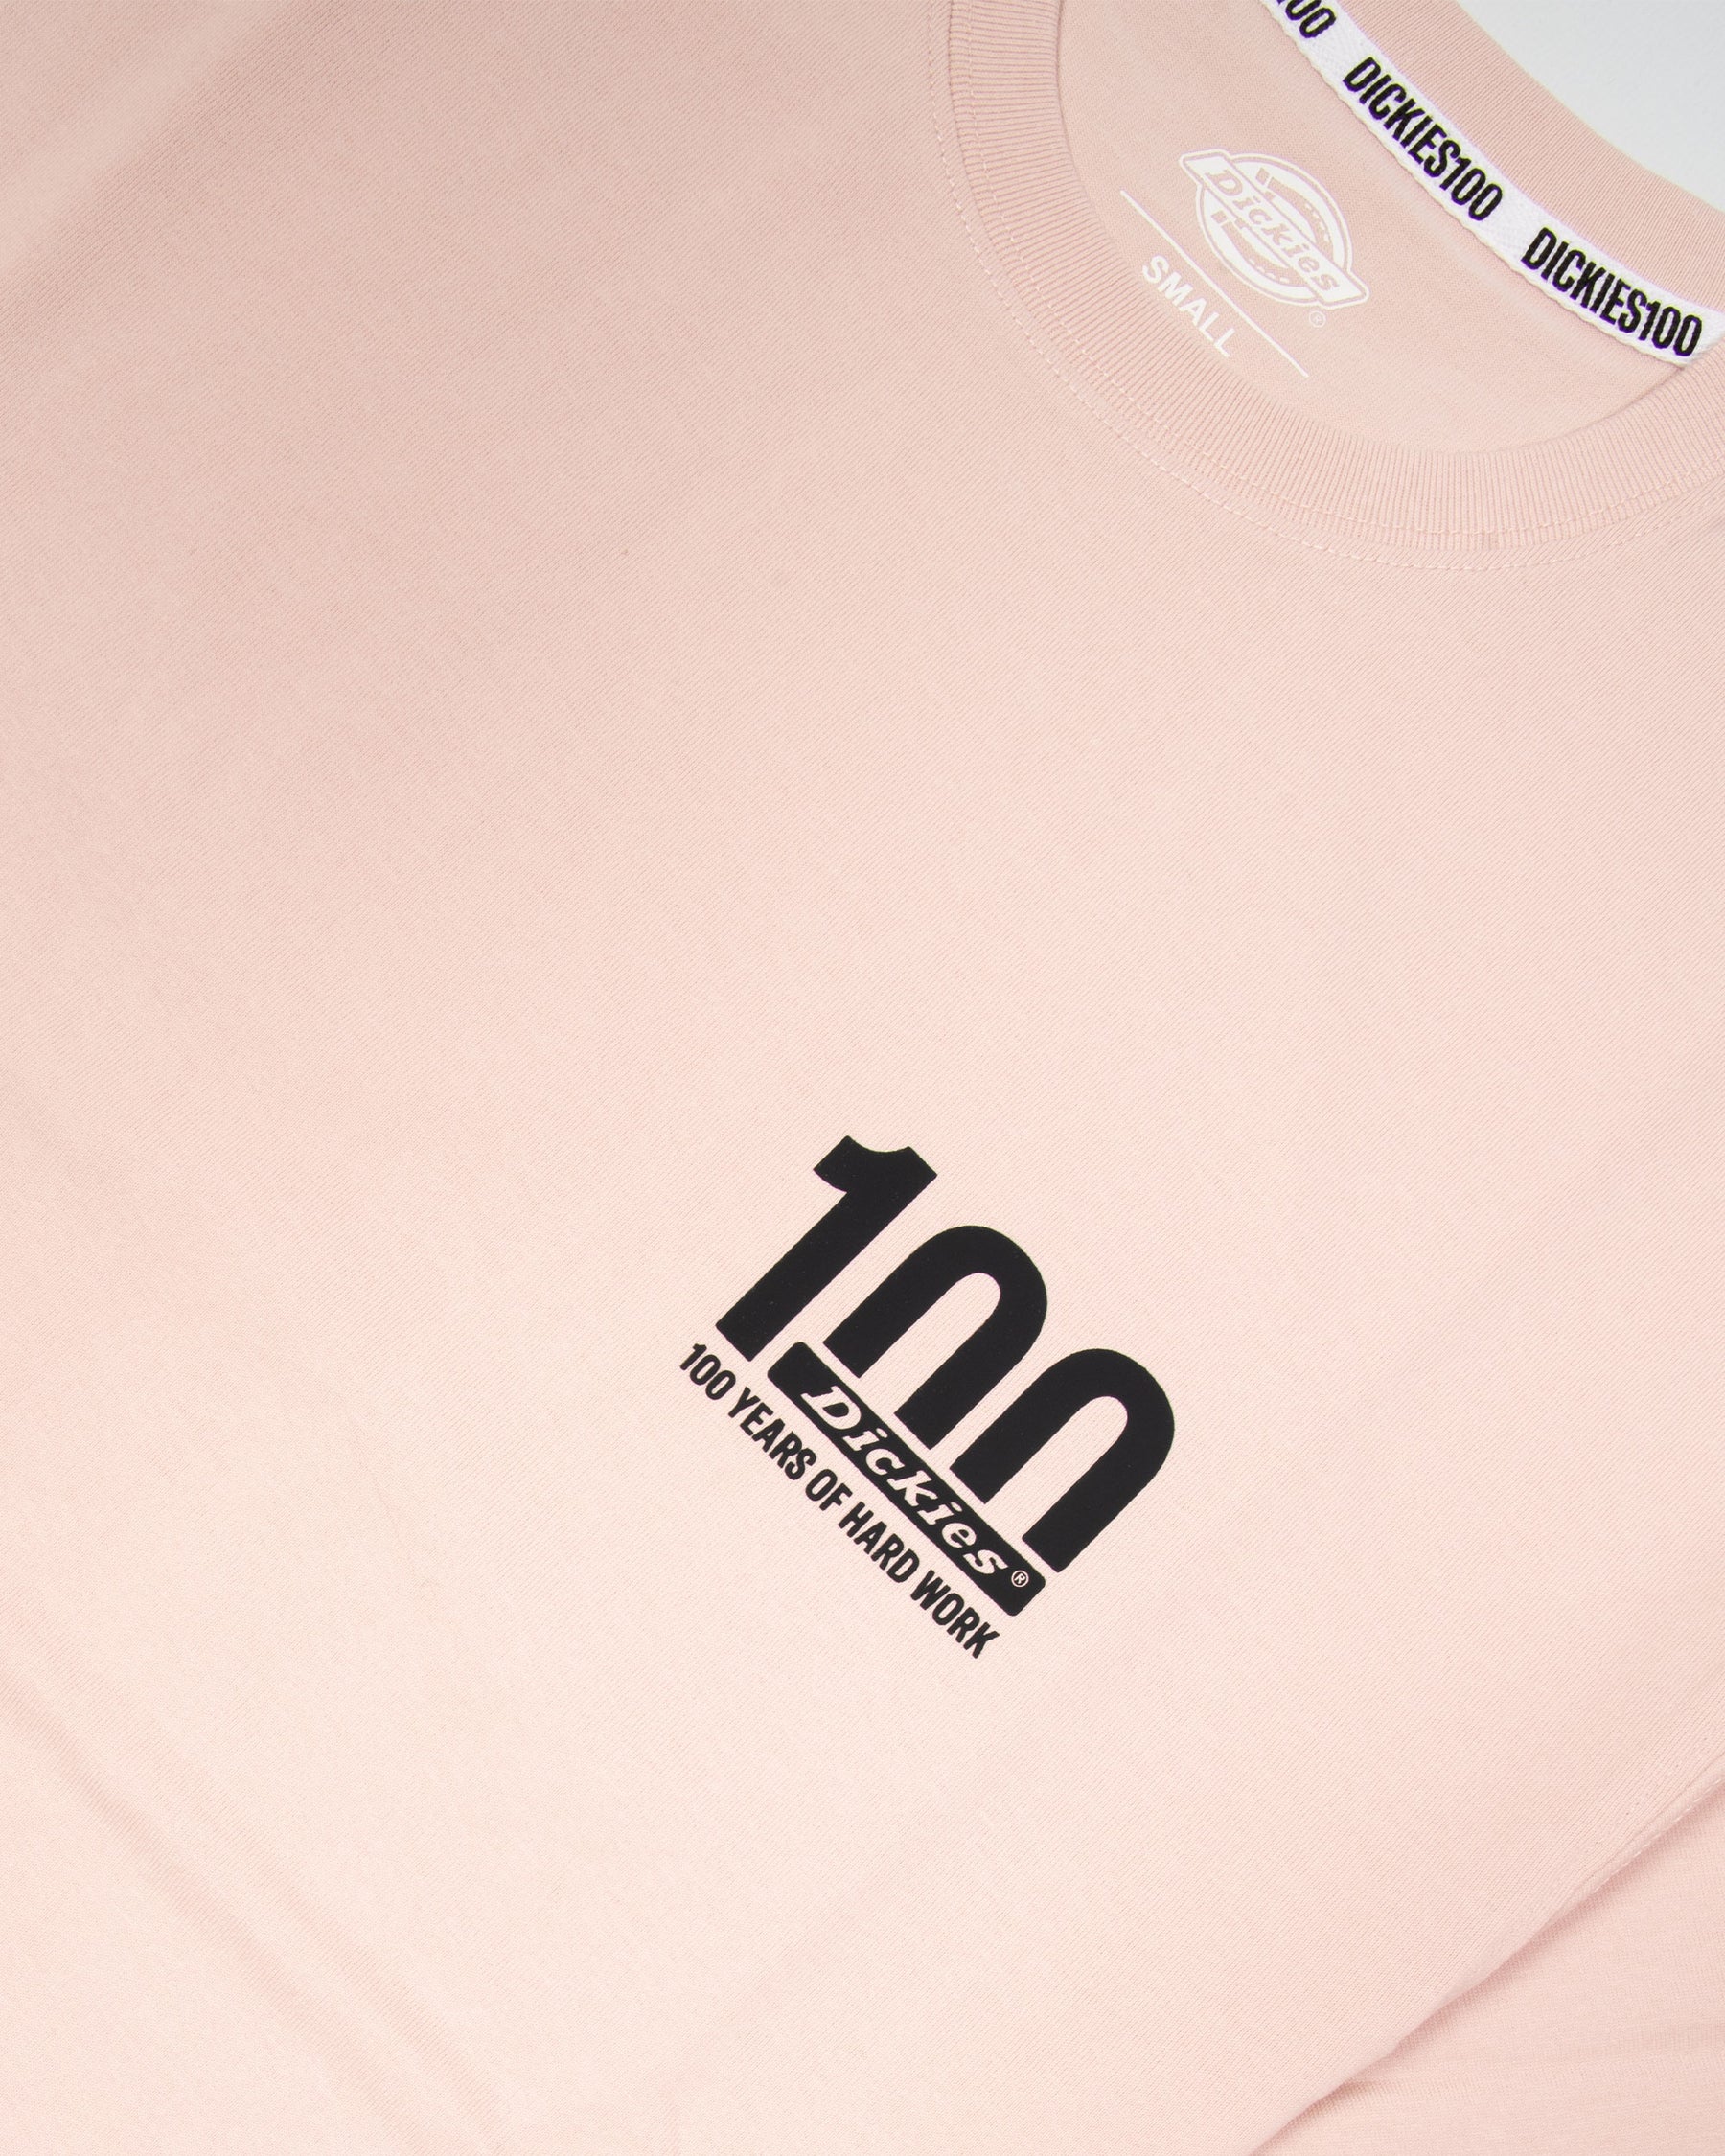 T-Shirt Uomo Dickies 100 Logo Rosa